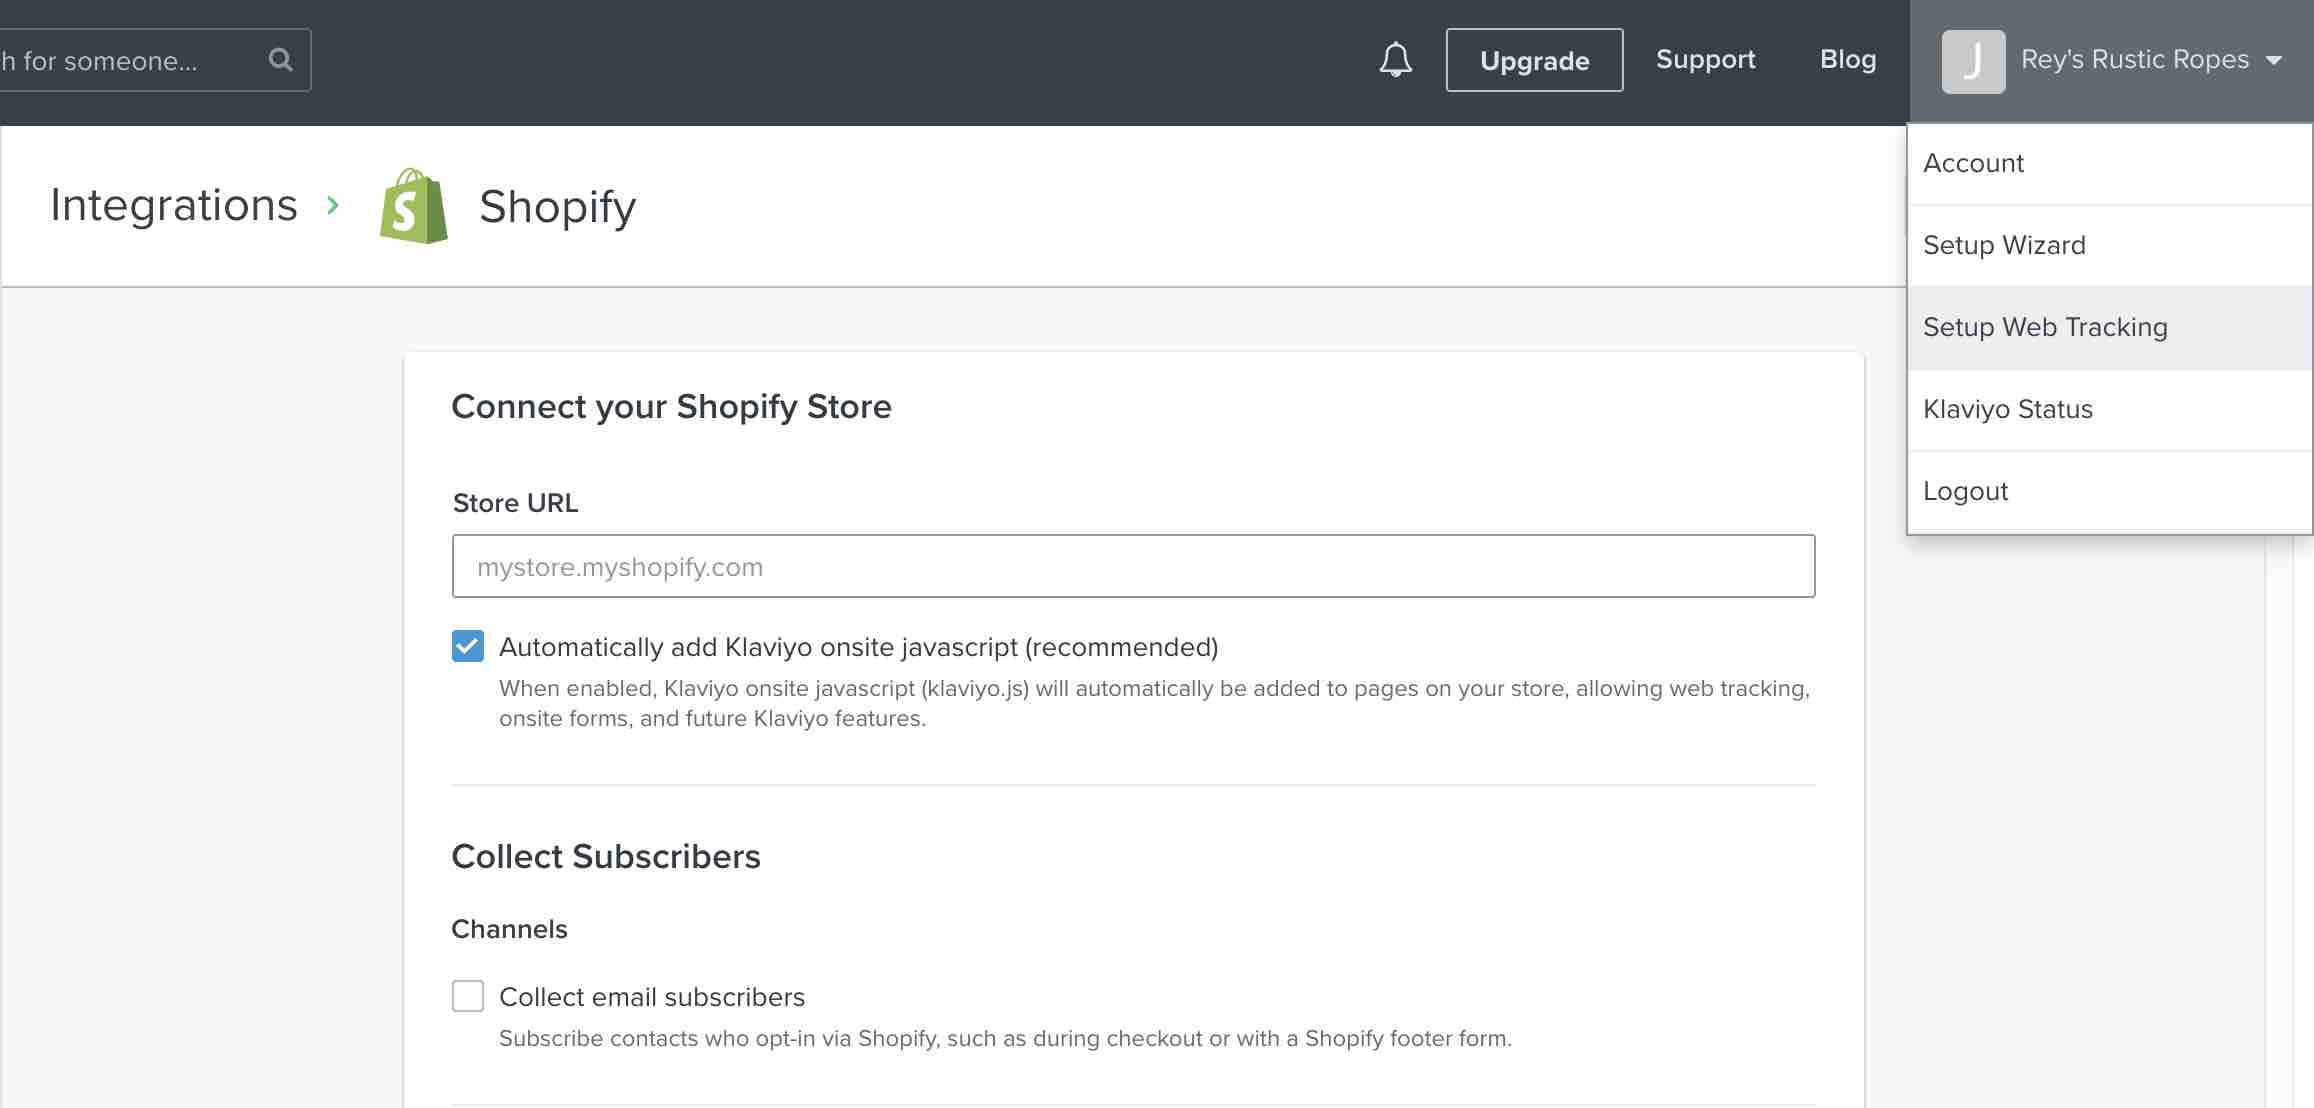 Klaviyo’s Shopify integration settings page, with account dropdown and Setup Web Tracking selected